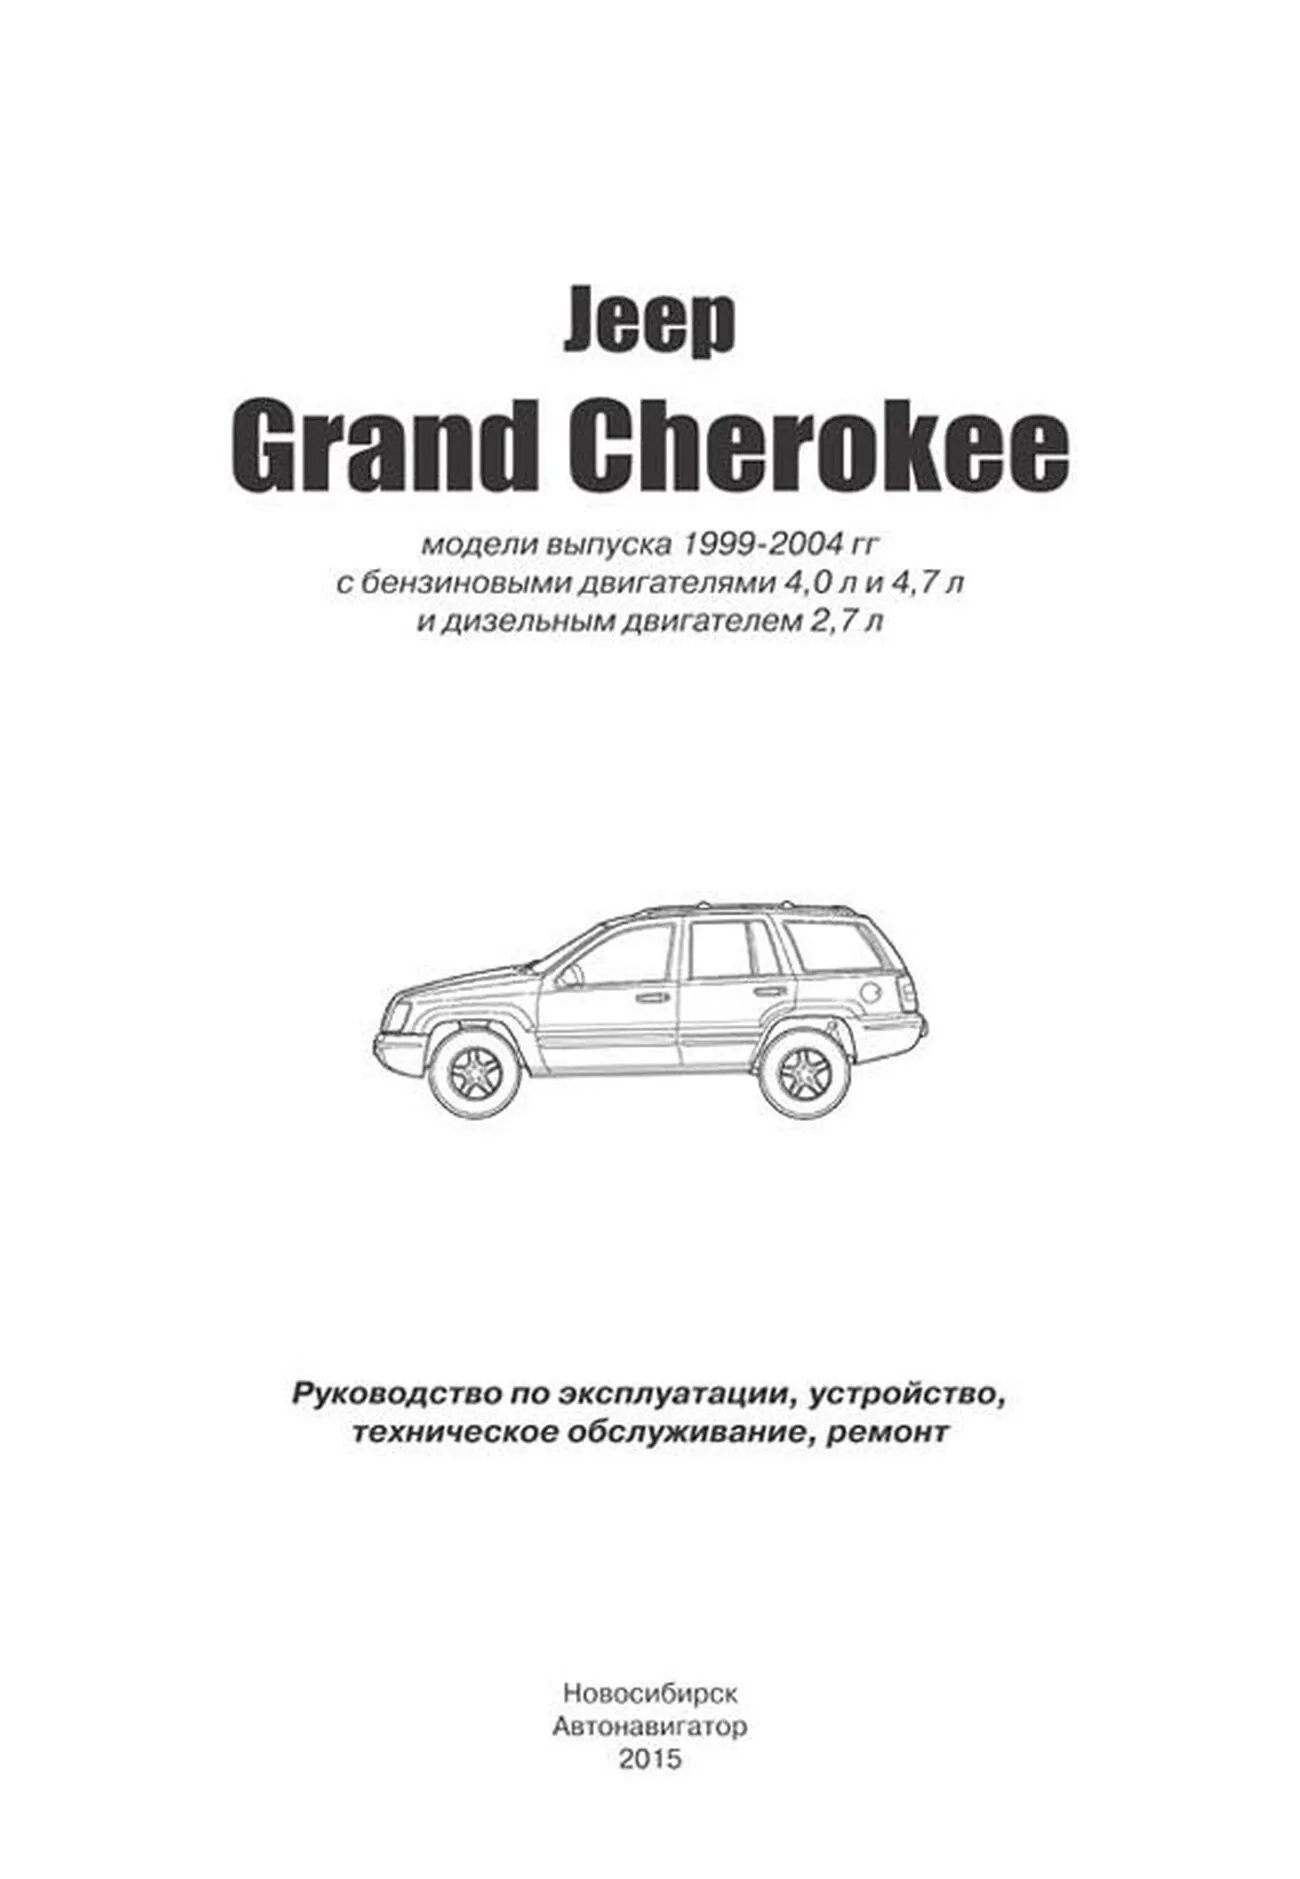 Книга: JEEP GRAND CHEROKEE (б , д) 1999-2004 г.в., рем., экспл., то | Автонавигатор